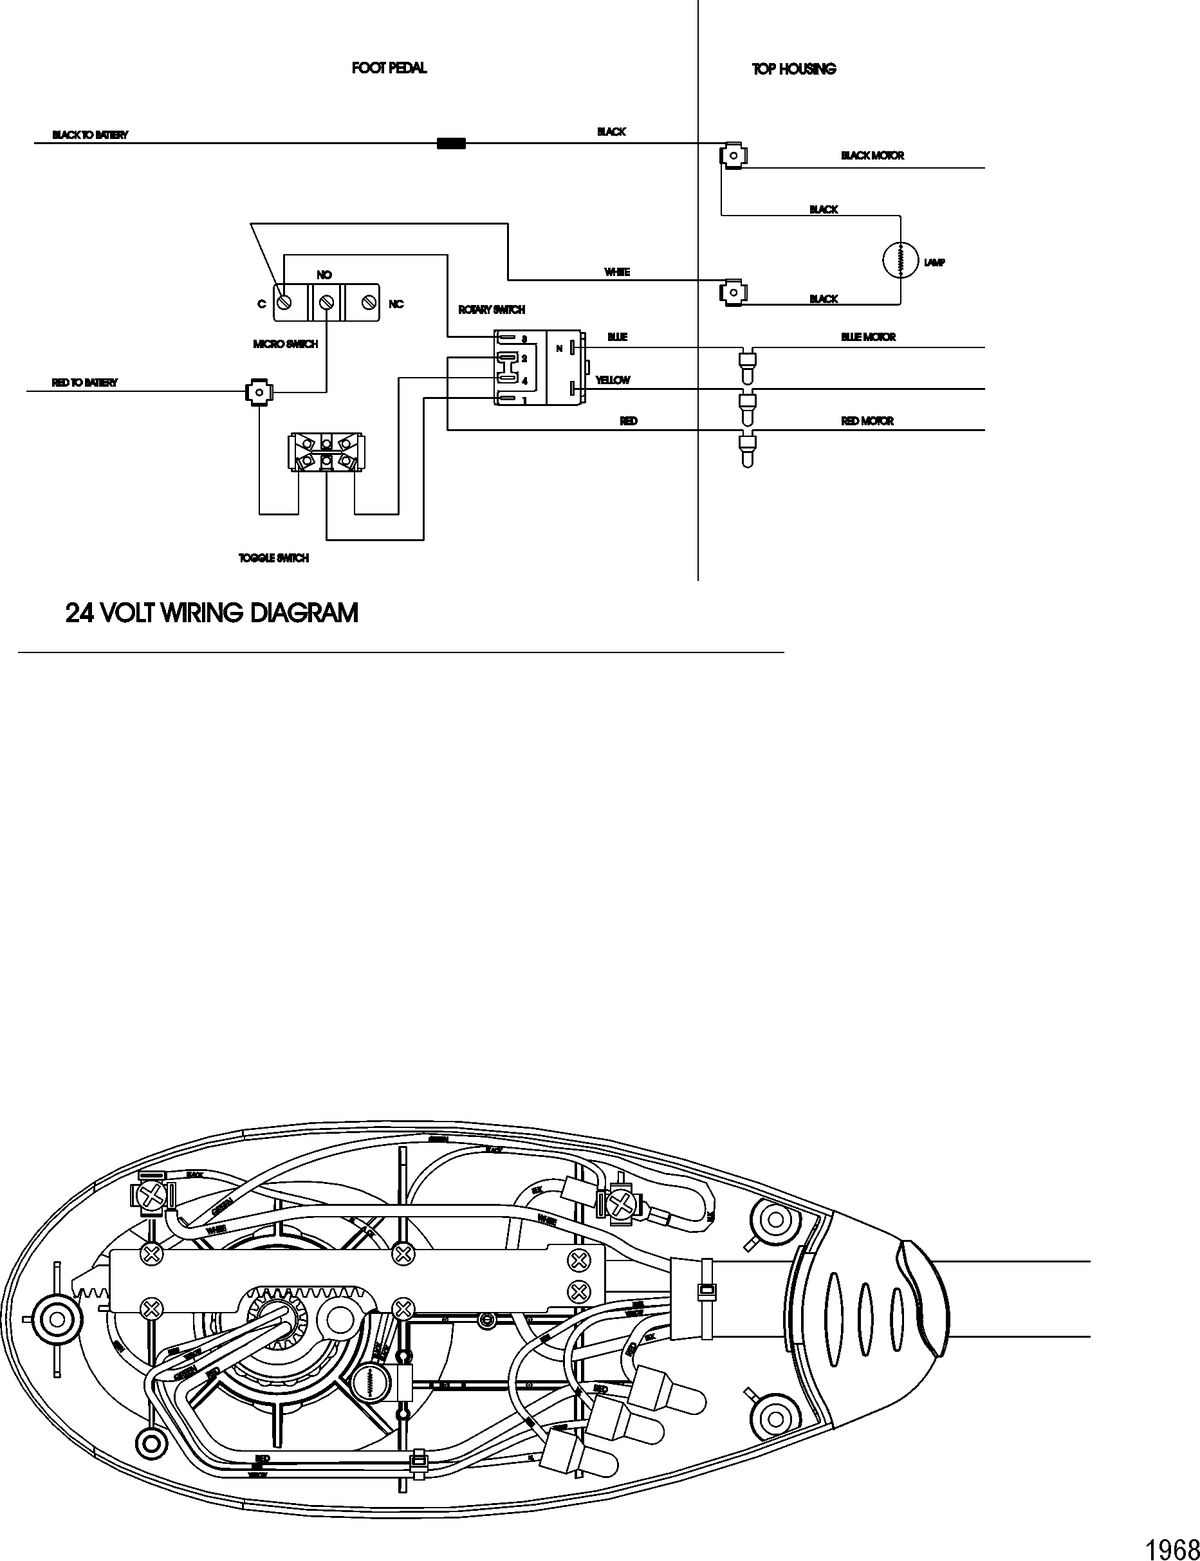 TROLLING MOTOR MOTORGUIDE FRESH WATER SERIES Wire Diagram(Model FW71FB)